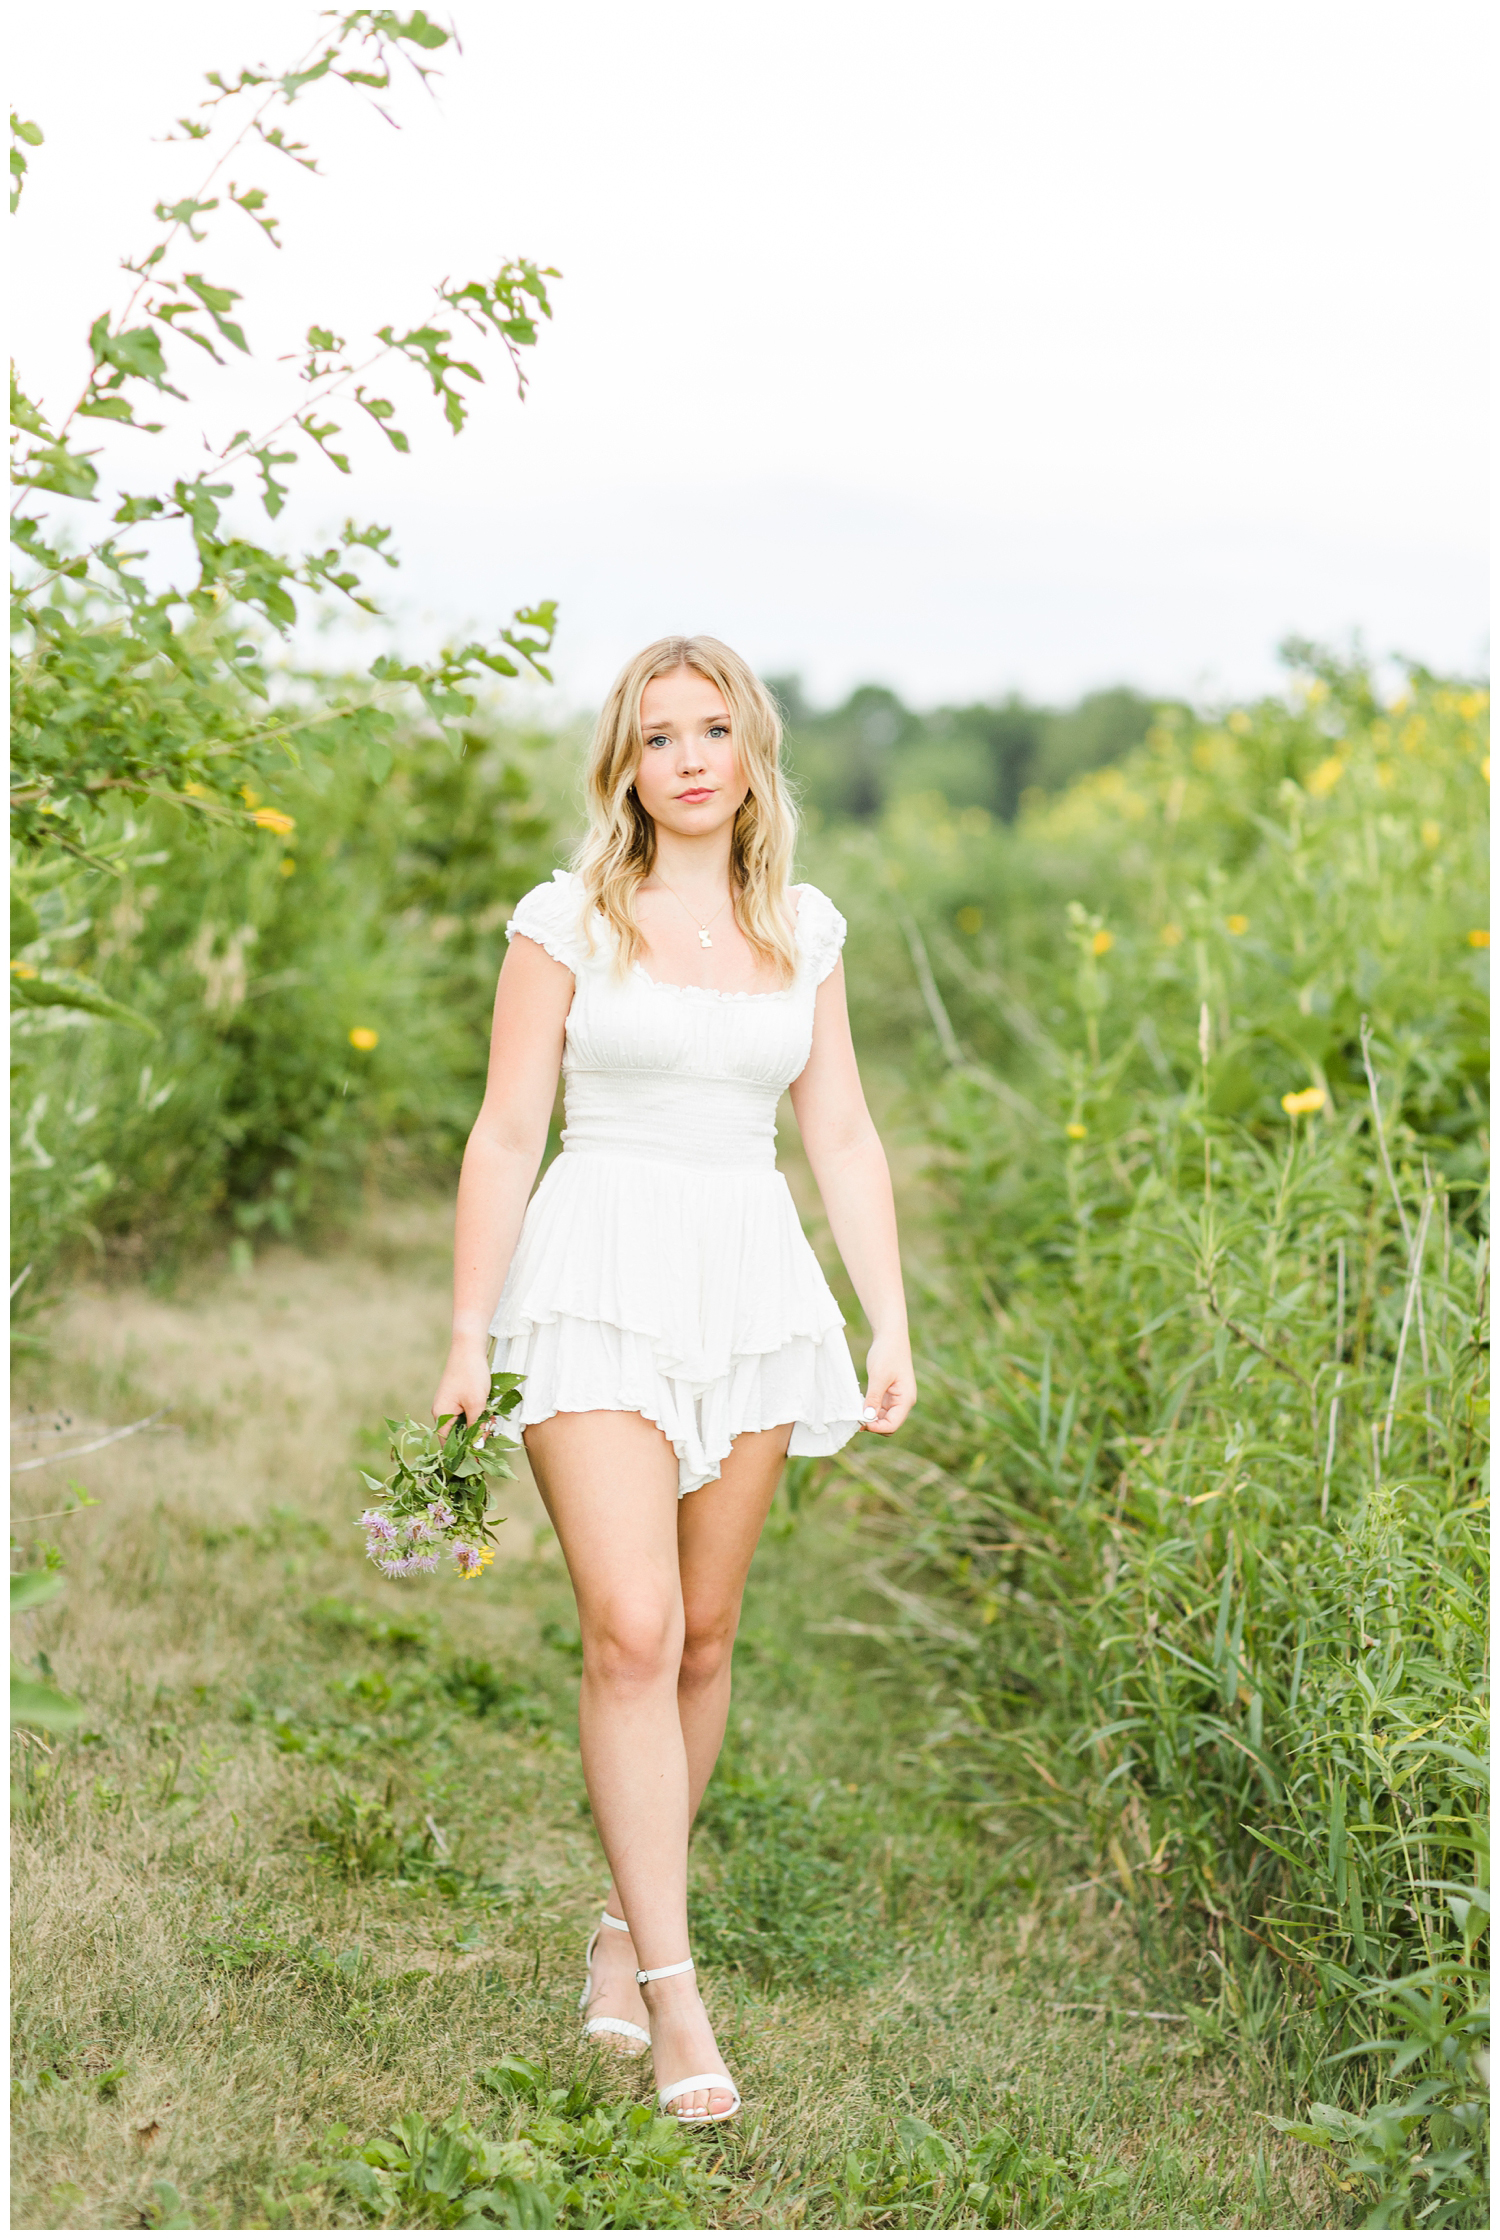 Cassie walks slowing through a field of wildflowers | CB Studio